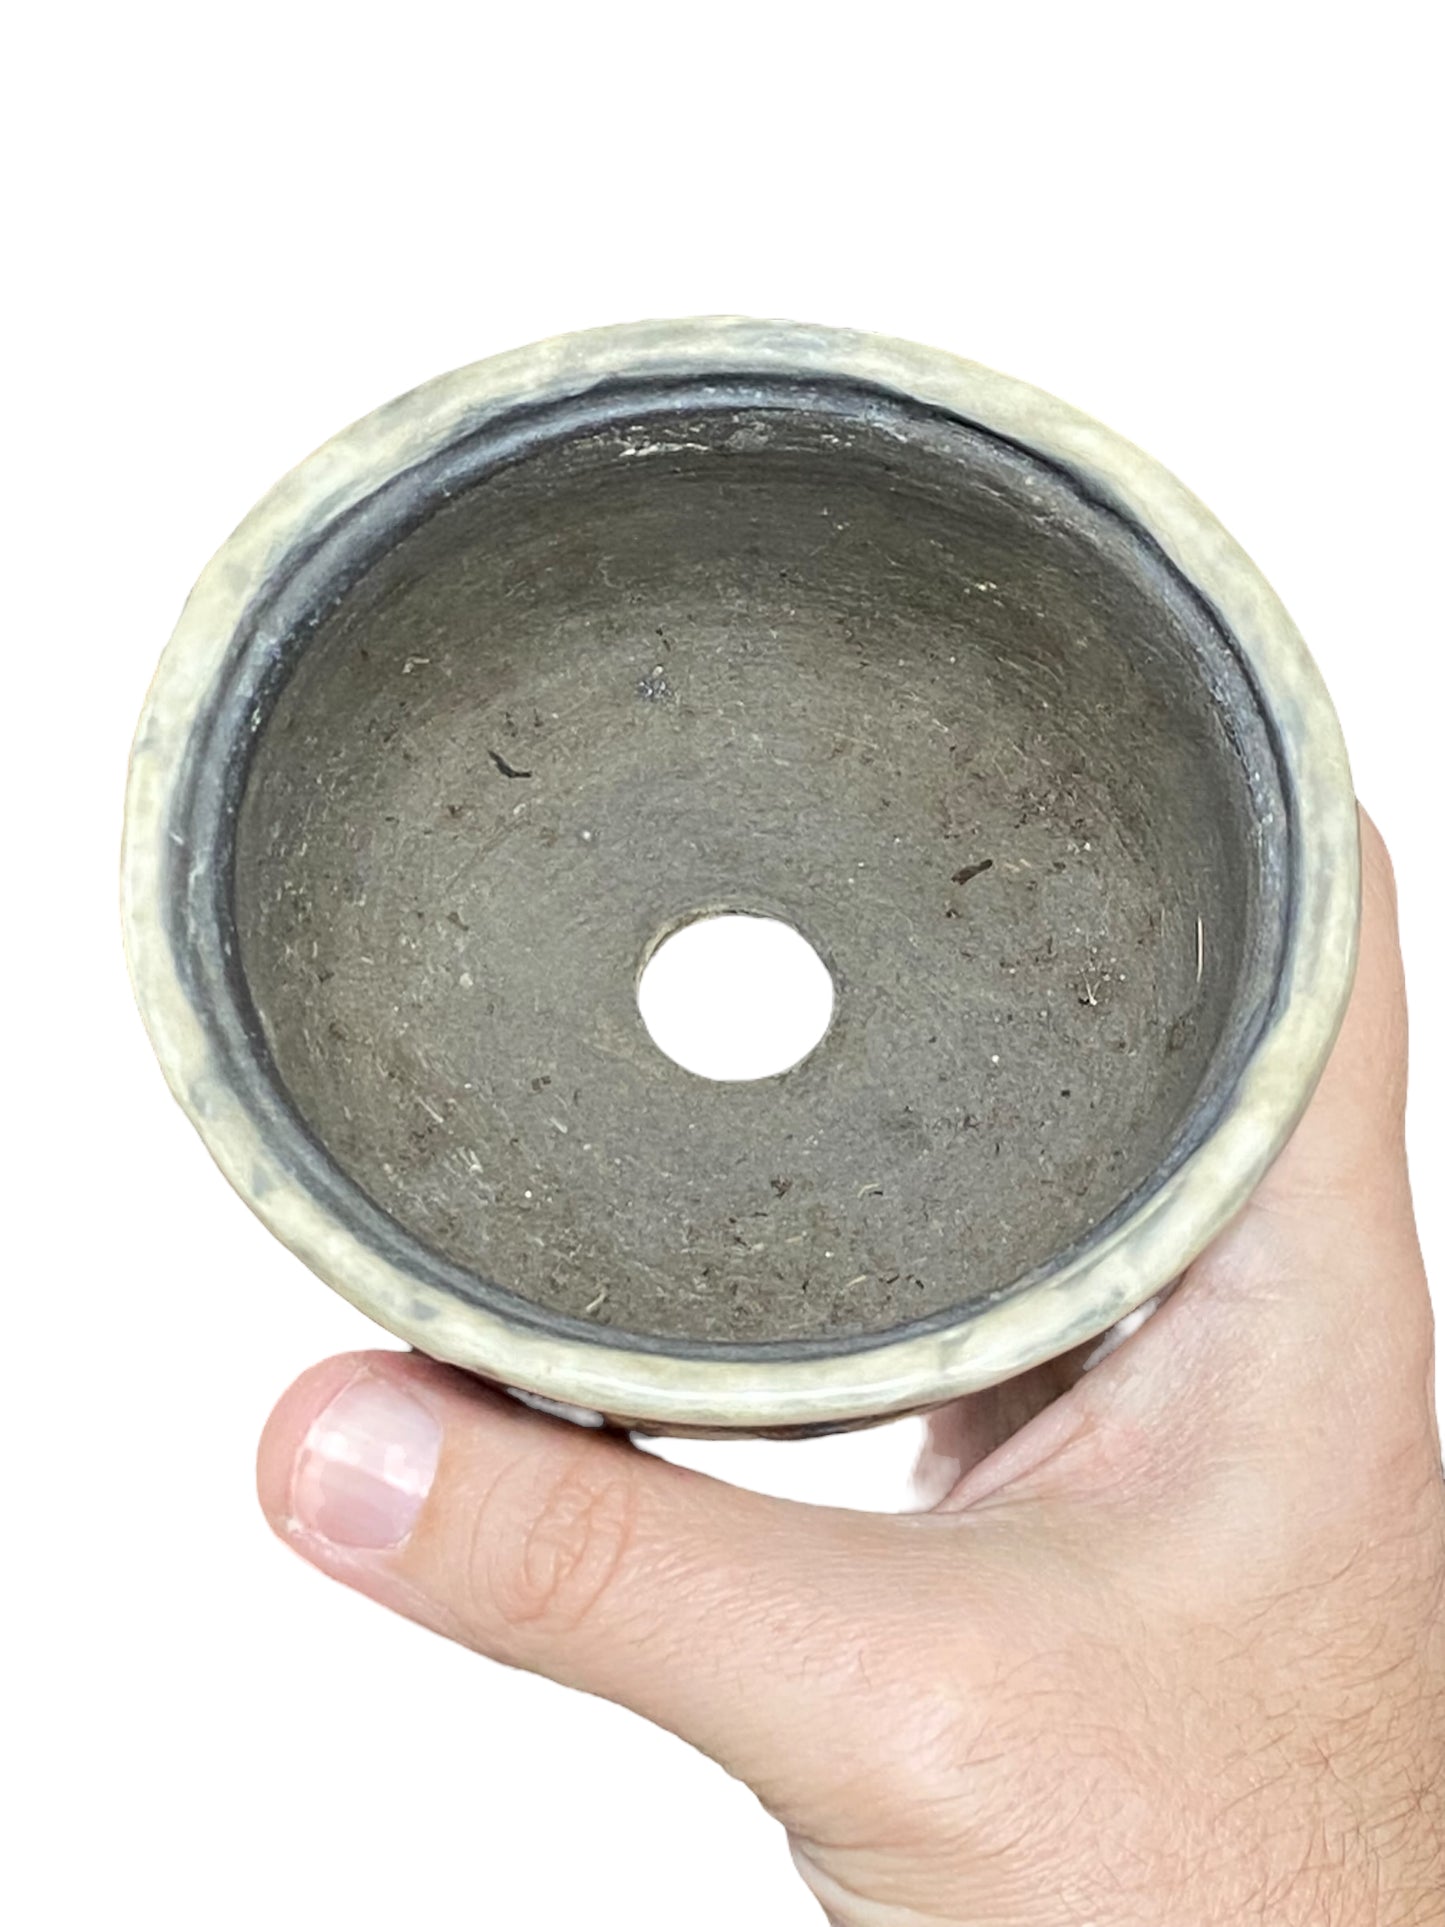 Hokusen - Rare Vintage Painted Bowl Bonsai Pot